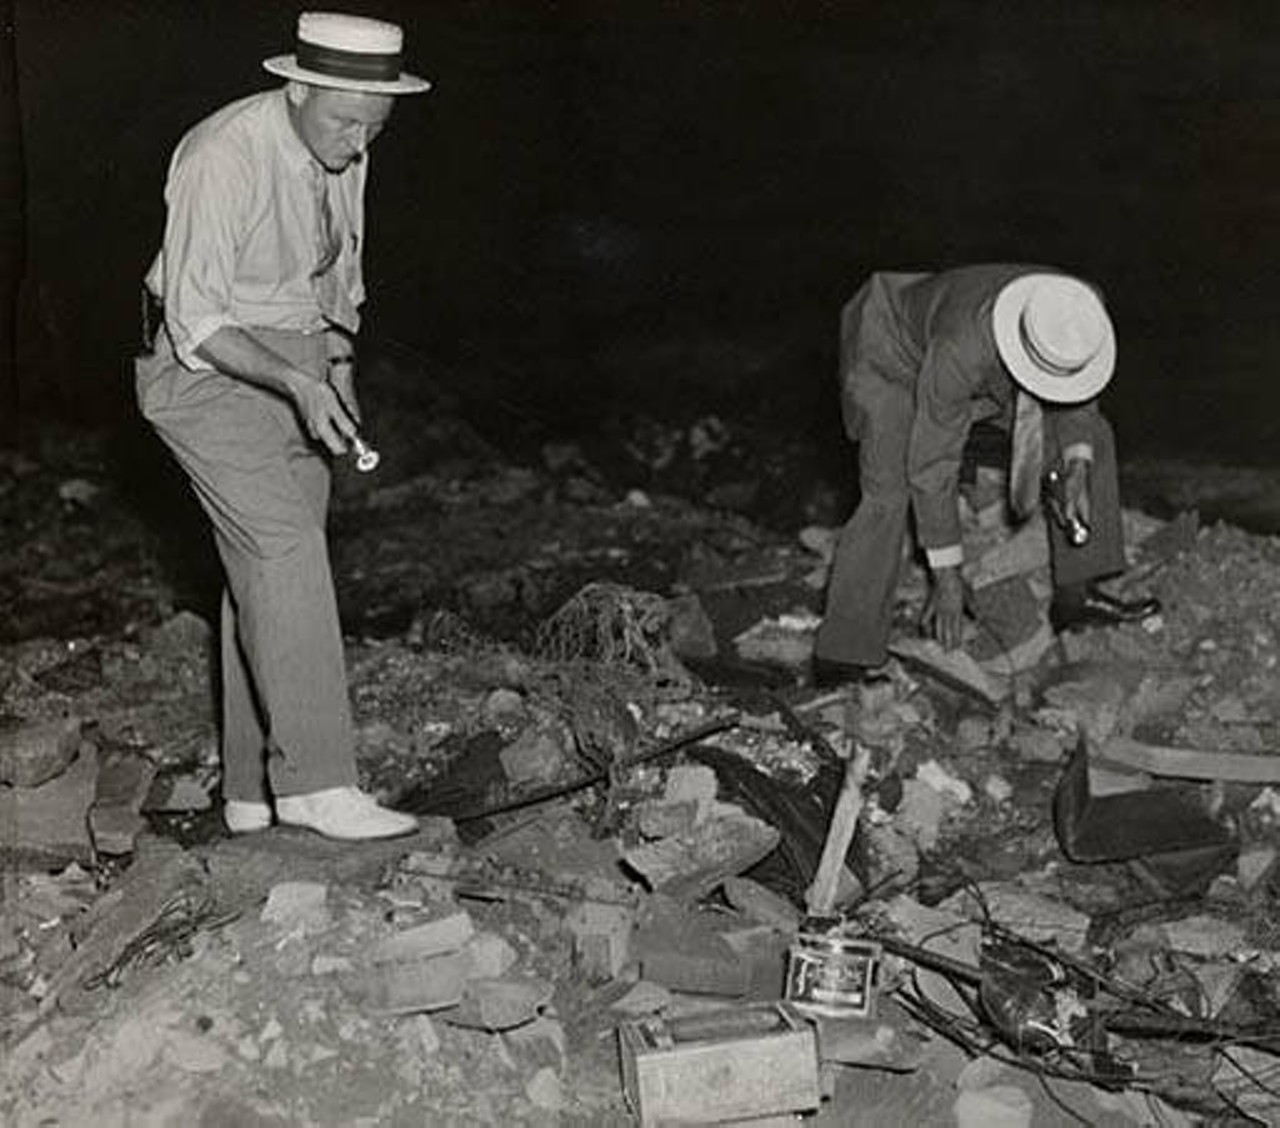 Detectives Herbert Wacksman and George Buckingham at dump